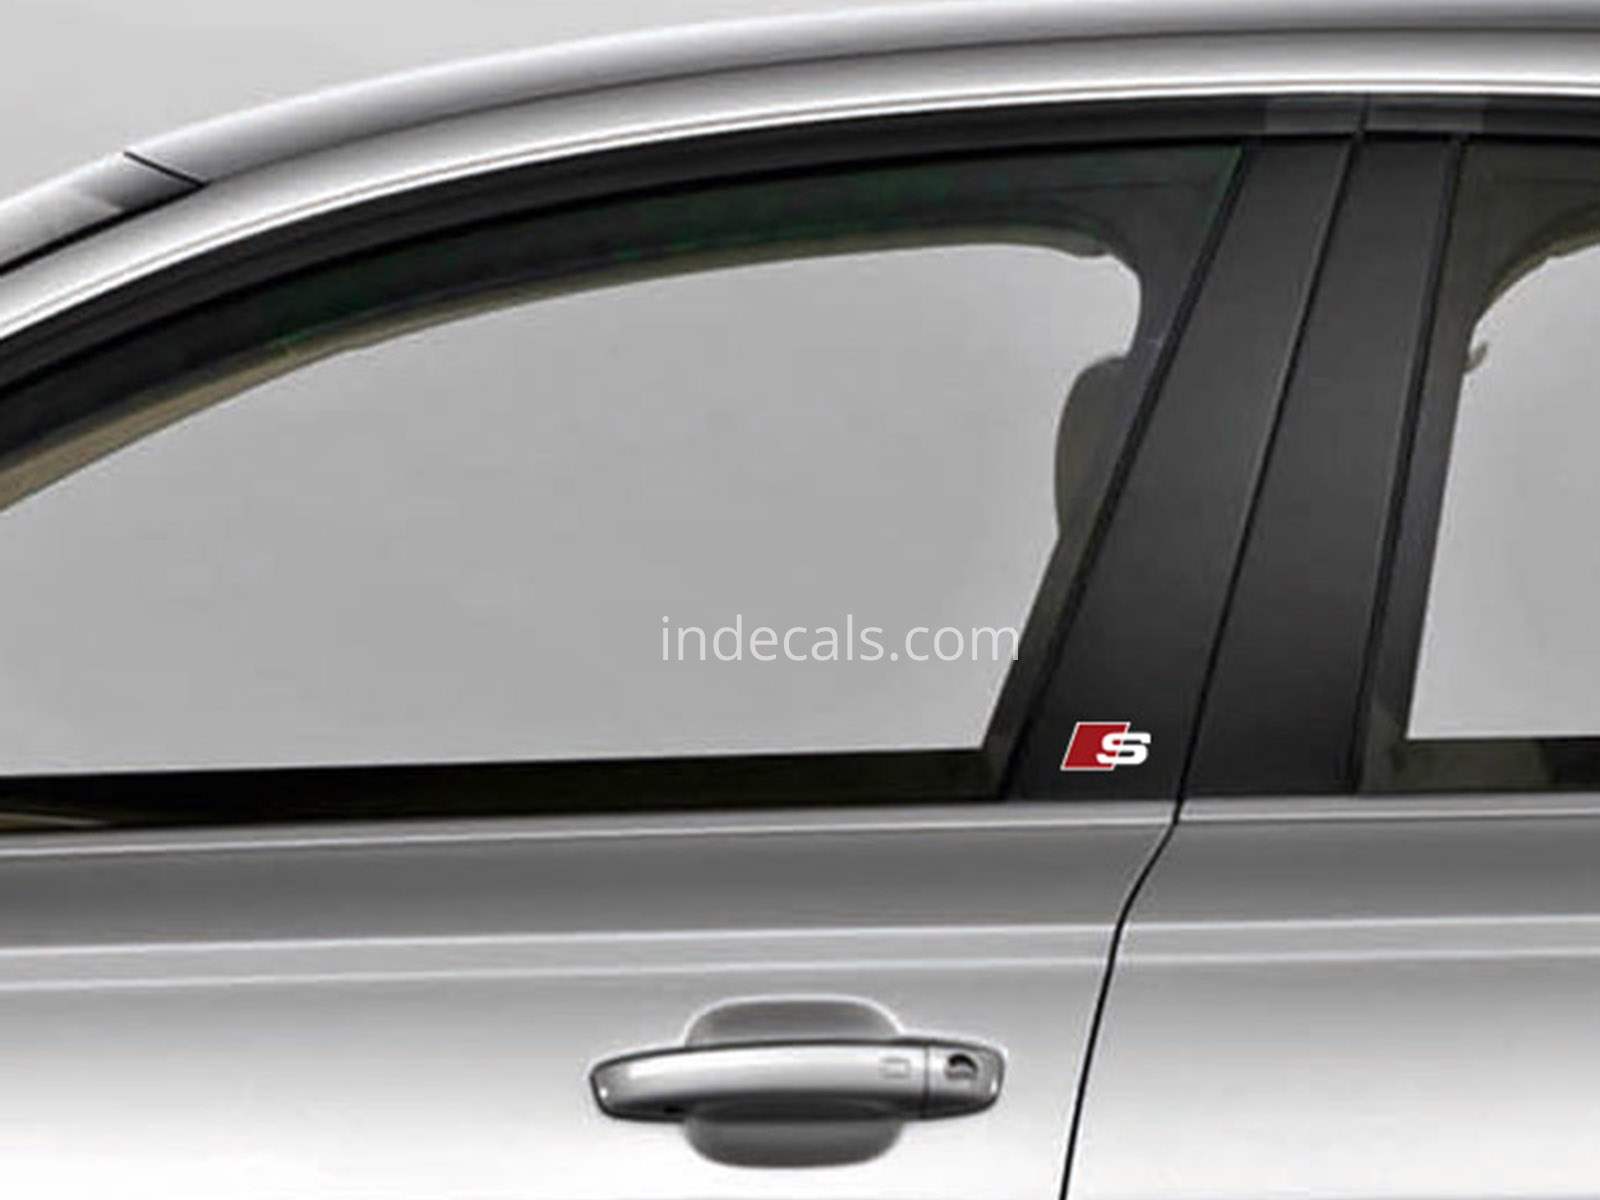 2 x Audi S-Line Stickers for Door Window Trim - White + Red